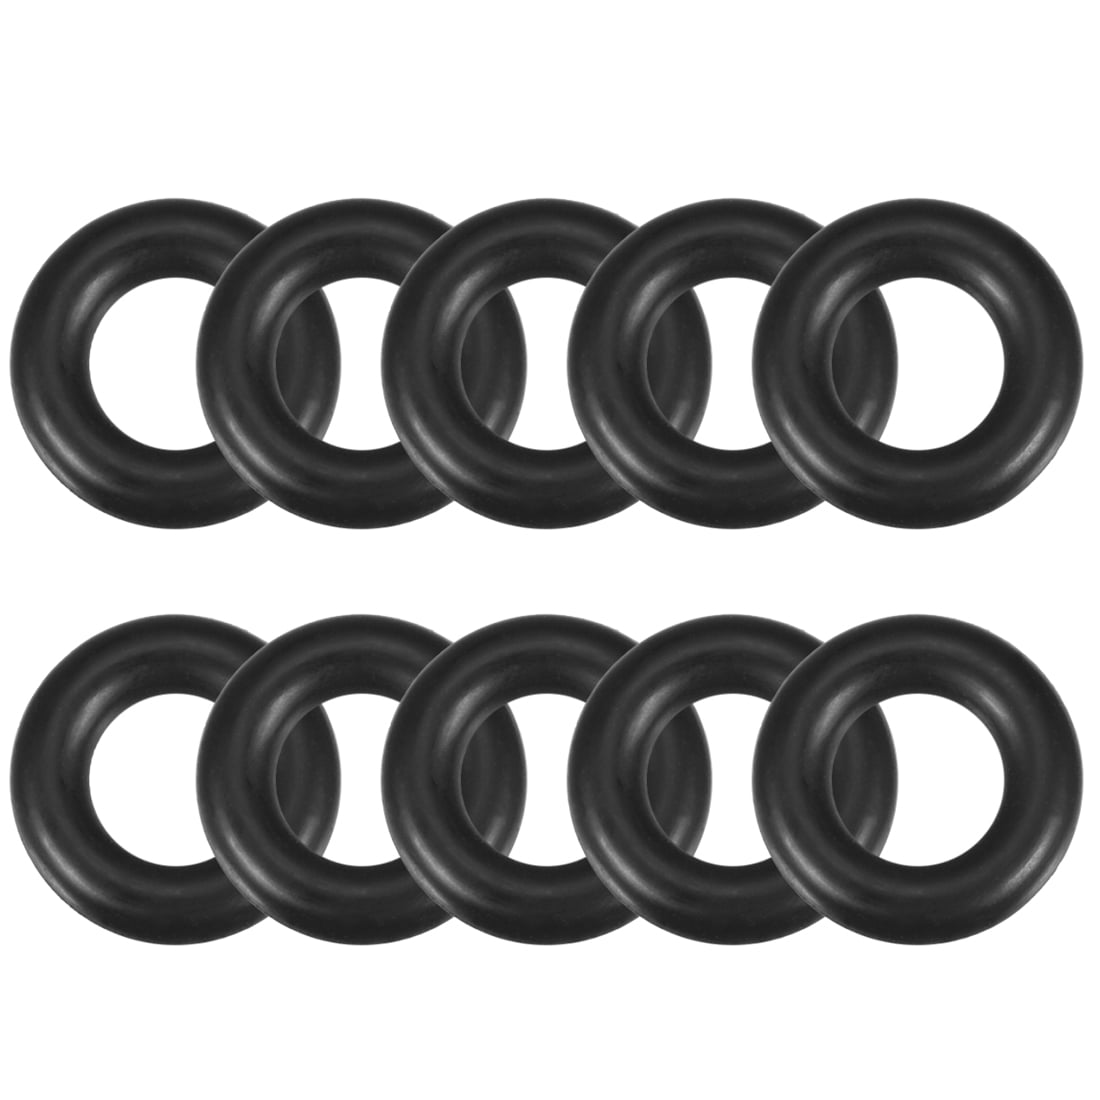 O-Rings Nitrile Rubber 3mm x 5mm x 1mm Seal Rings Sealing Gasket 20pcs -  Walmart.com